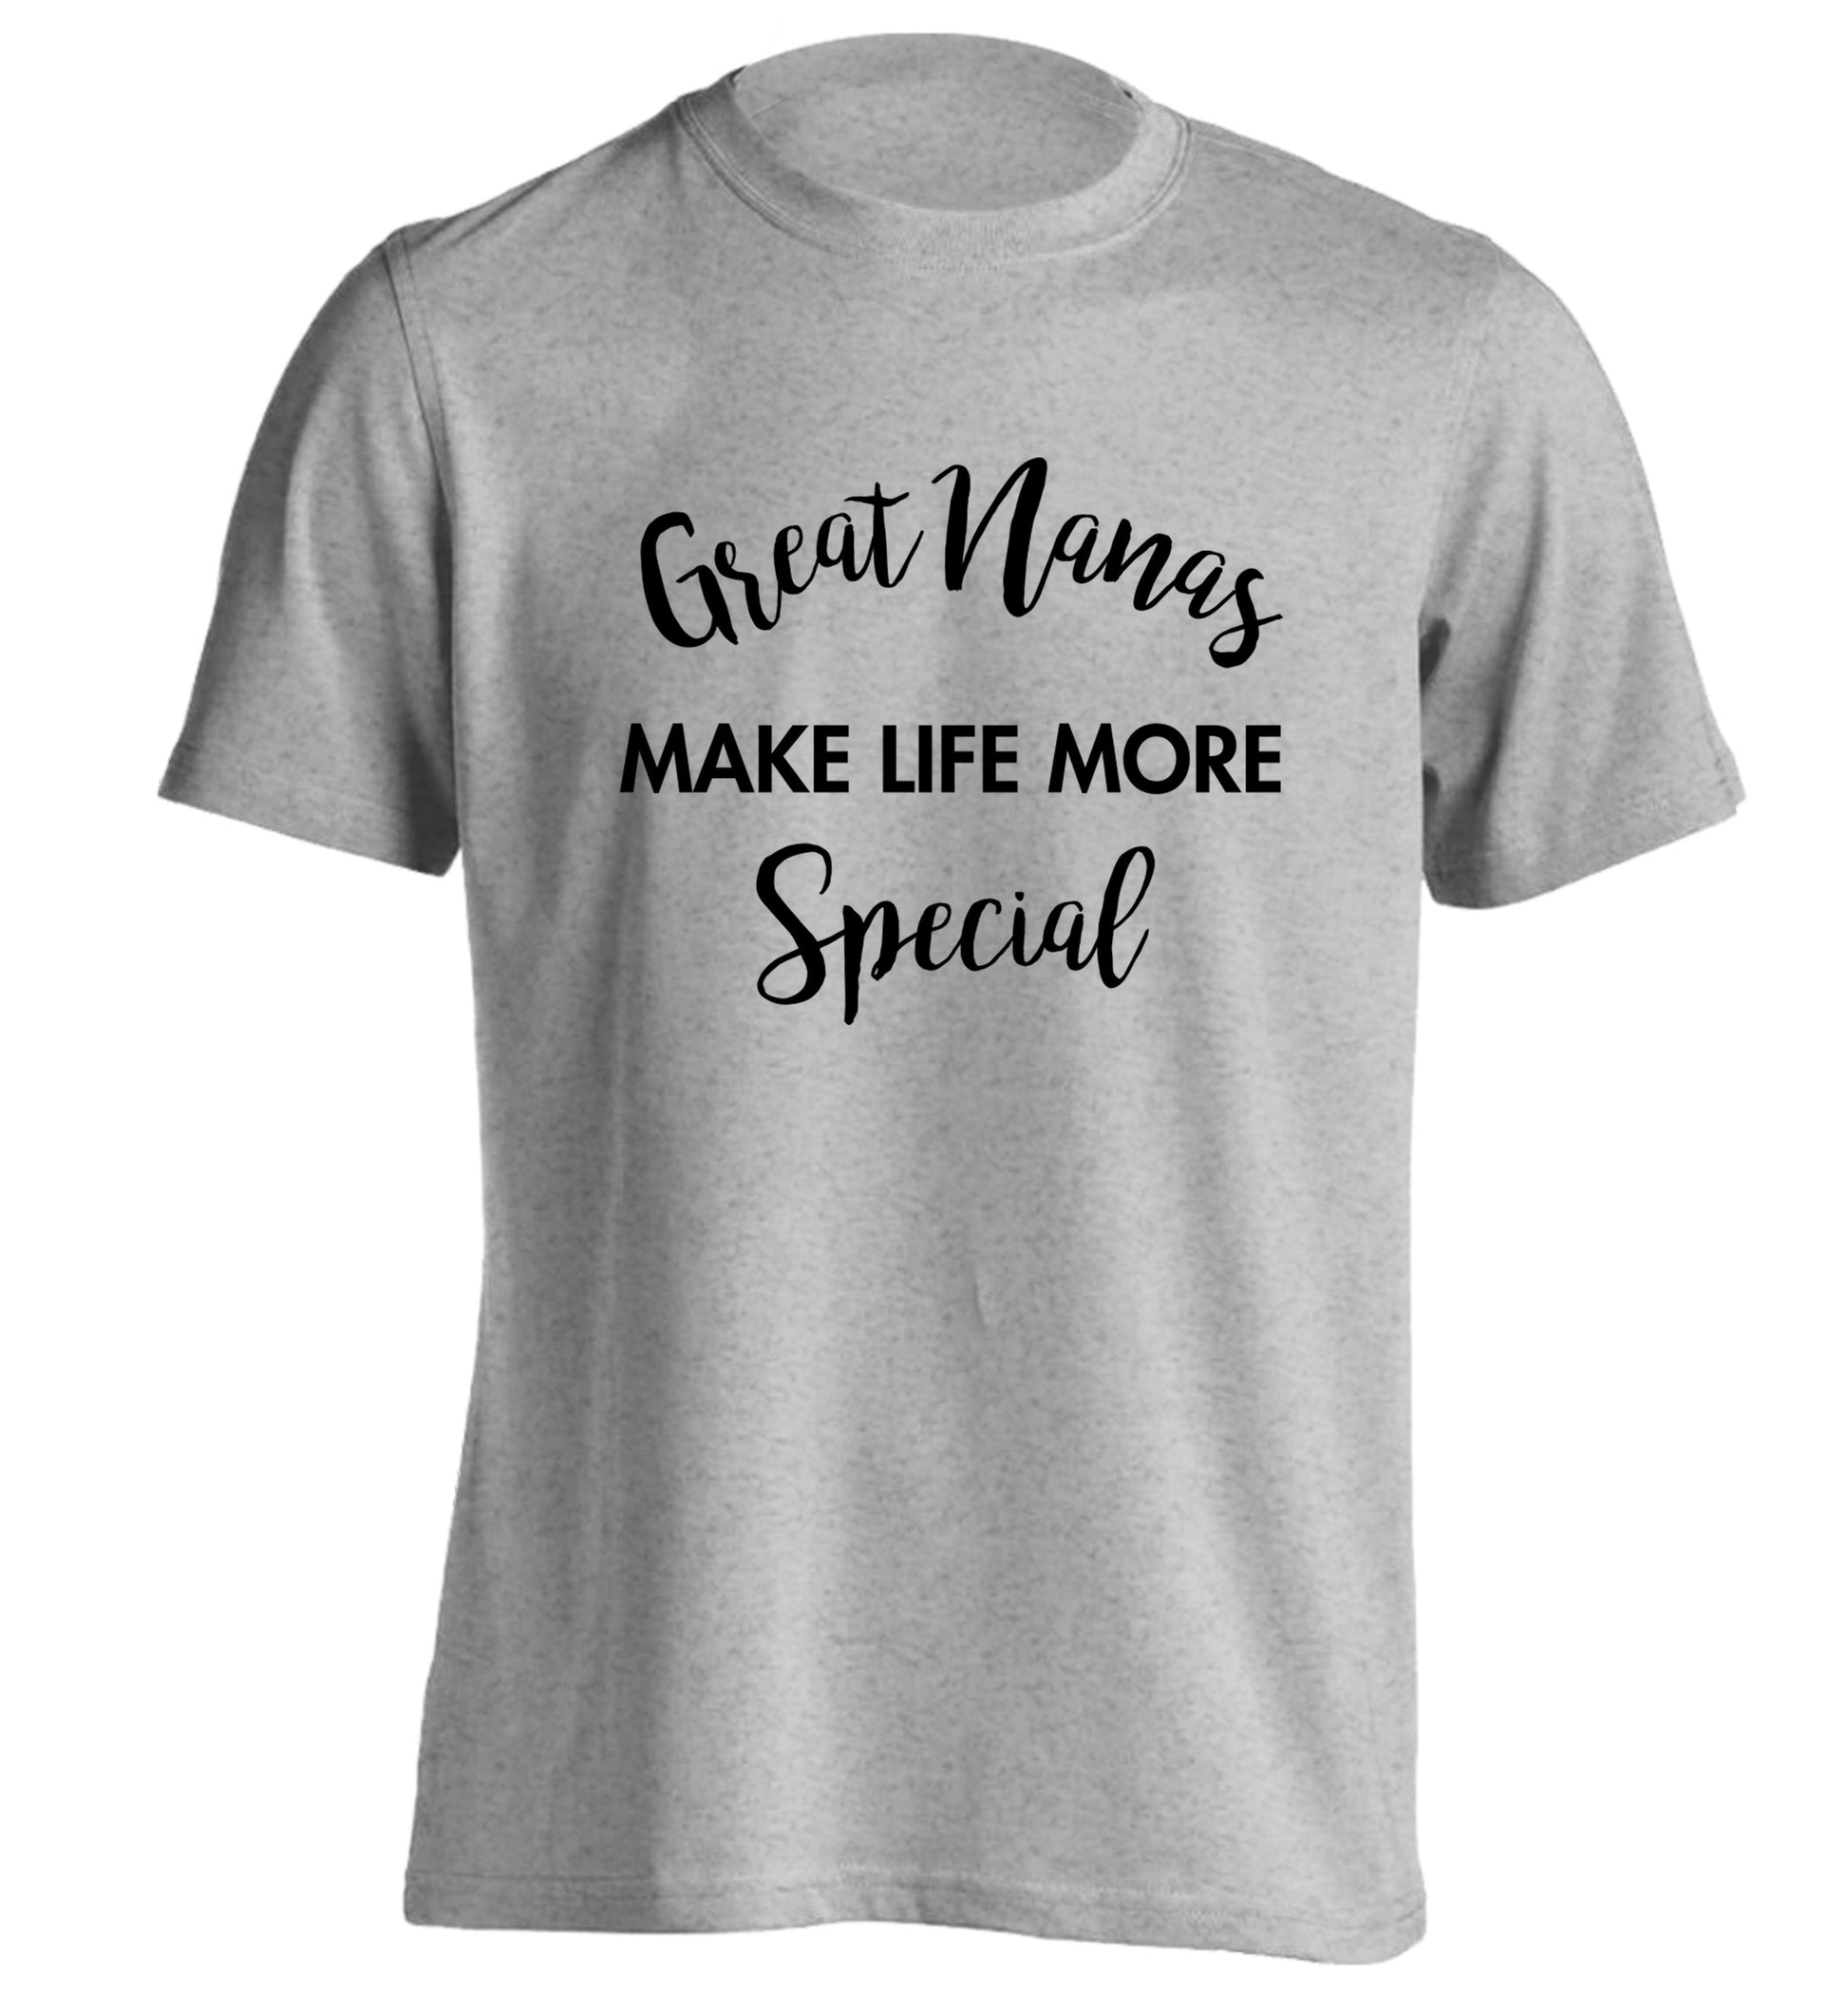 Great nanas make life more special adults unisex grey Tshirt 2XL